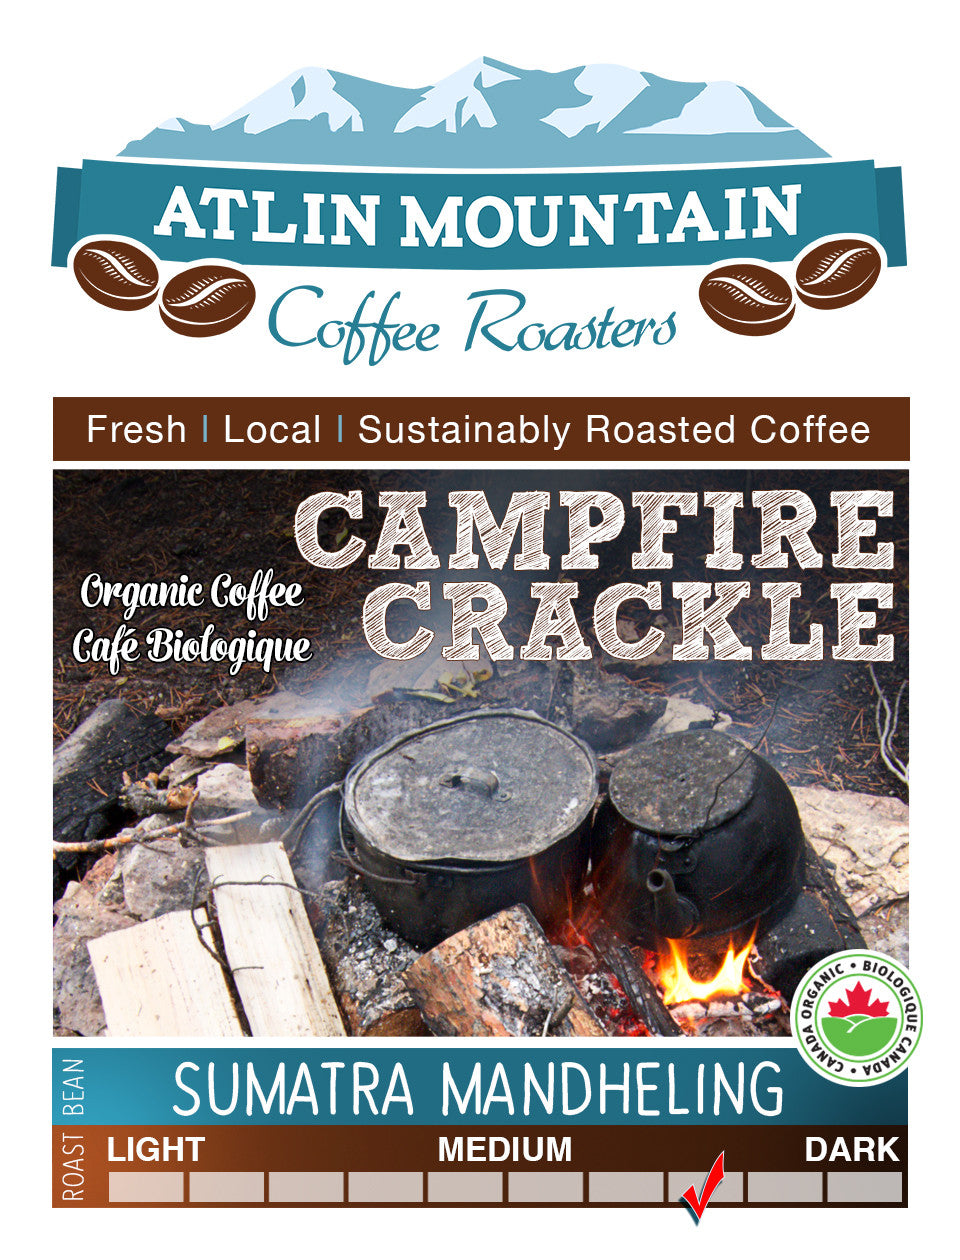 Sumatra Mandheling, Dark roast - atlin-mountain-coffee